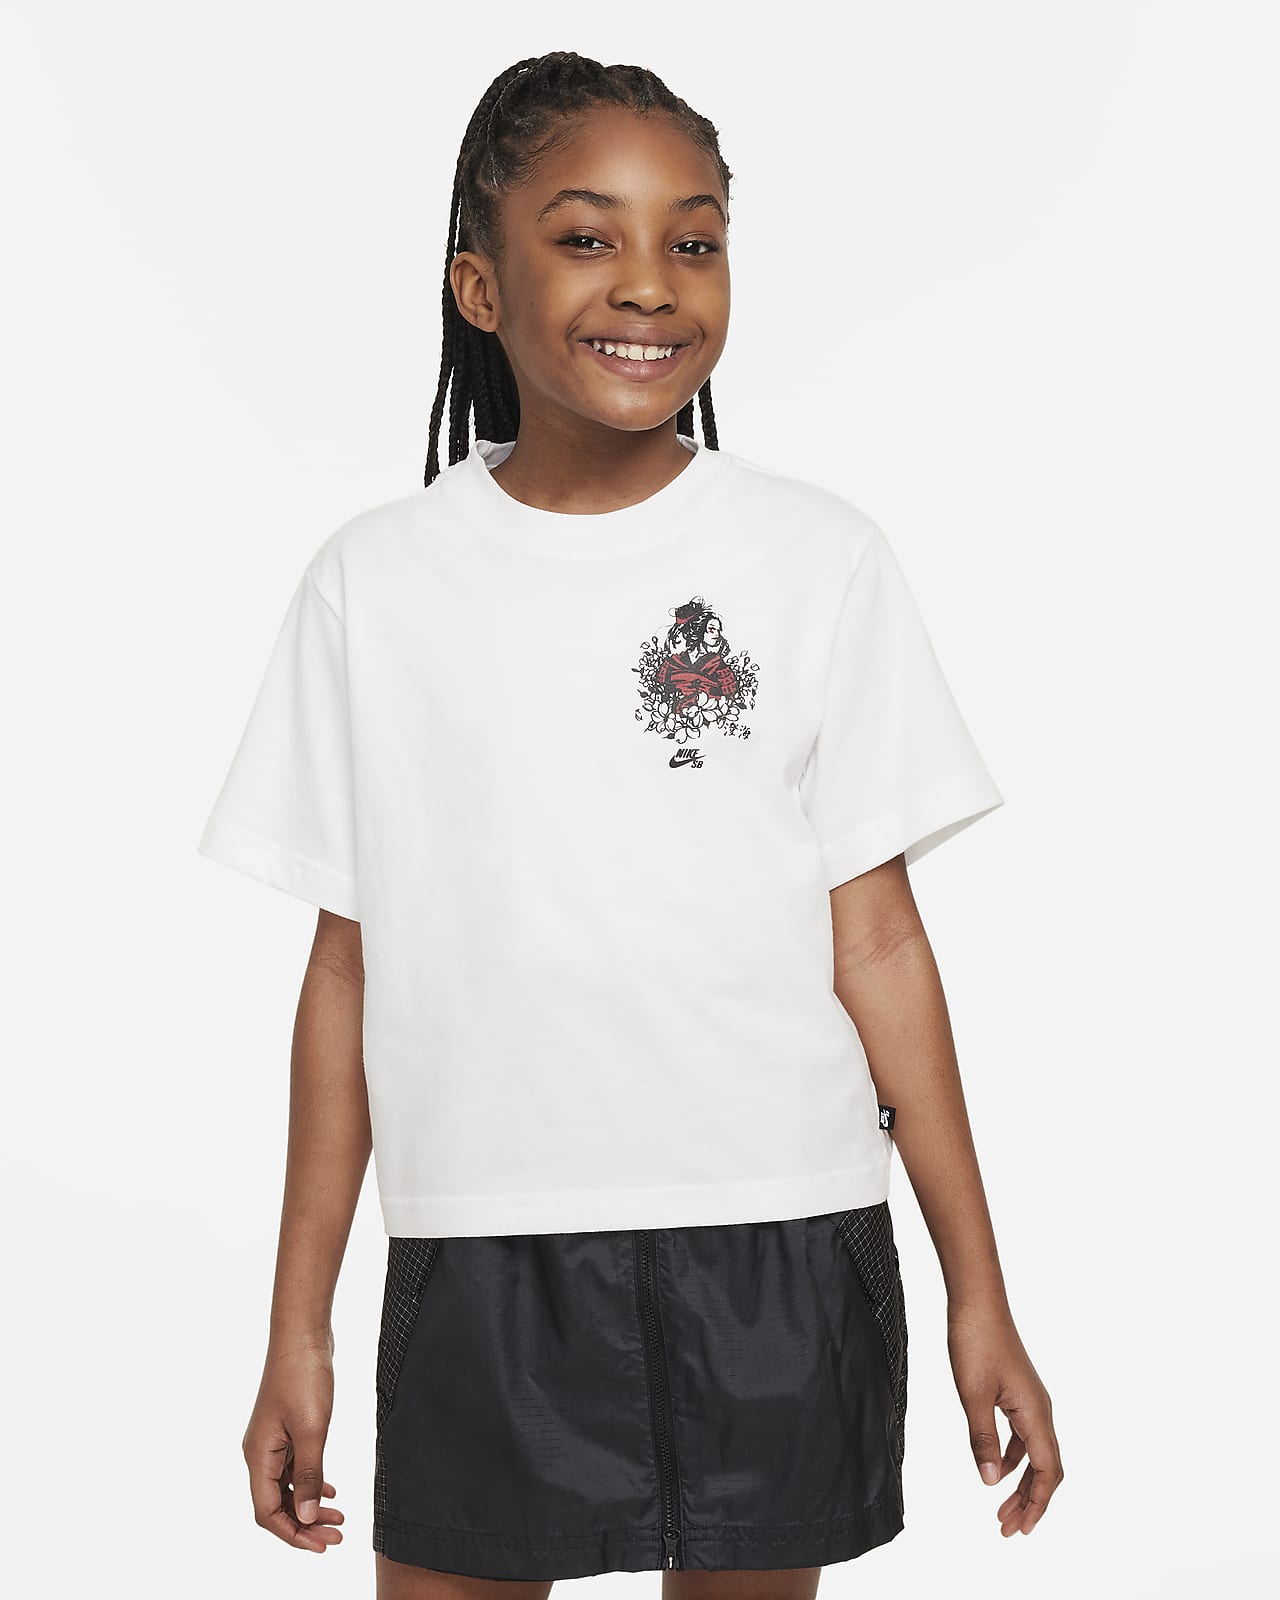 Sky Brown x Nike SB Skateboarding-T-Shirt für ältere Kinder (Mädchen)